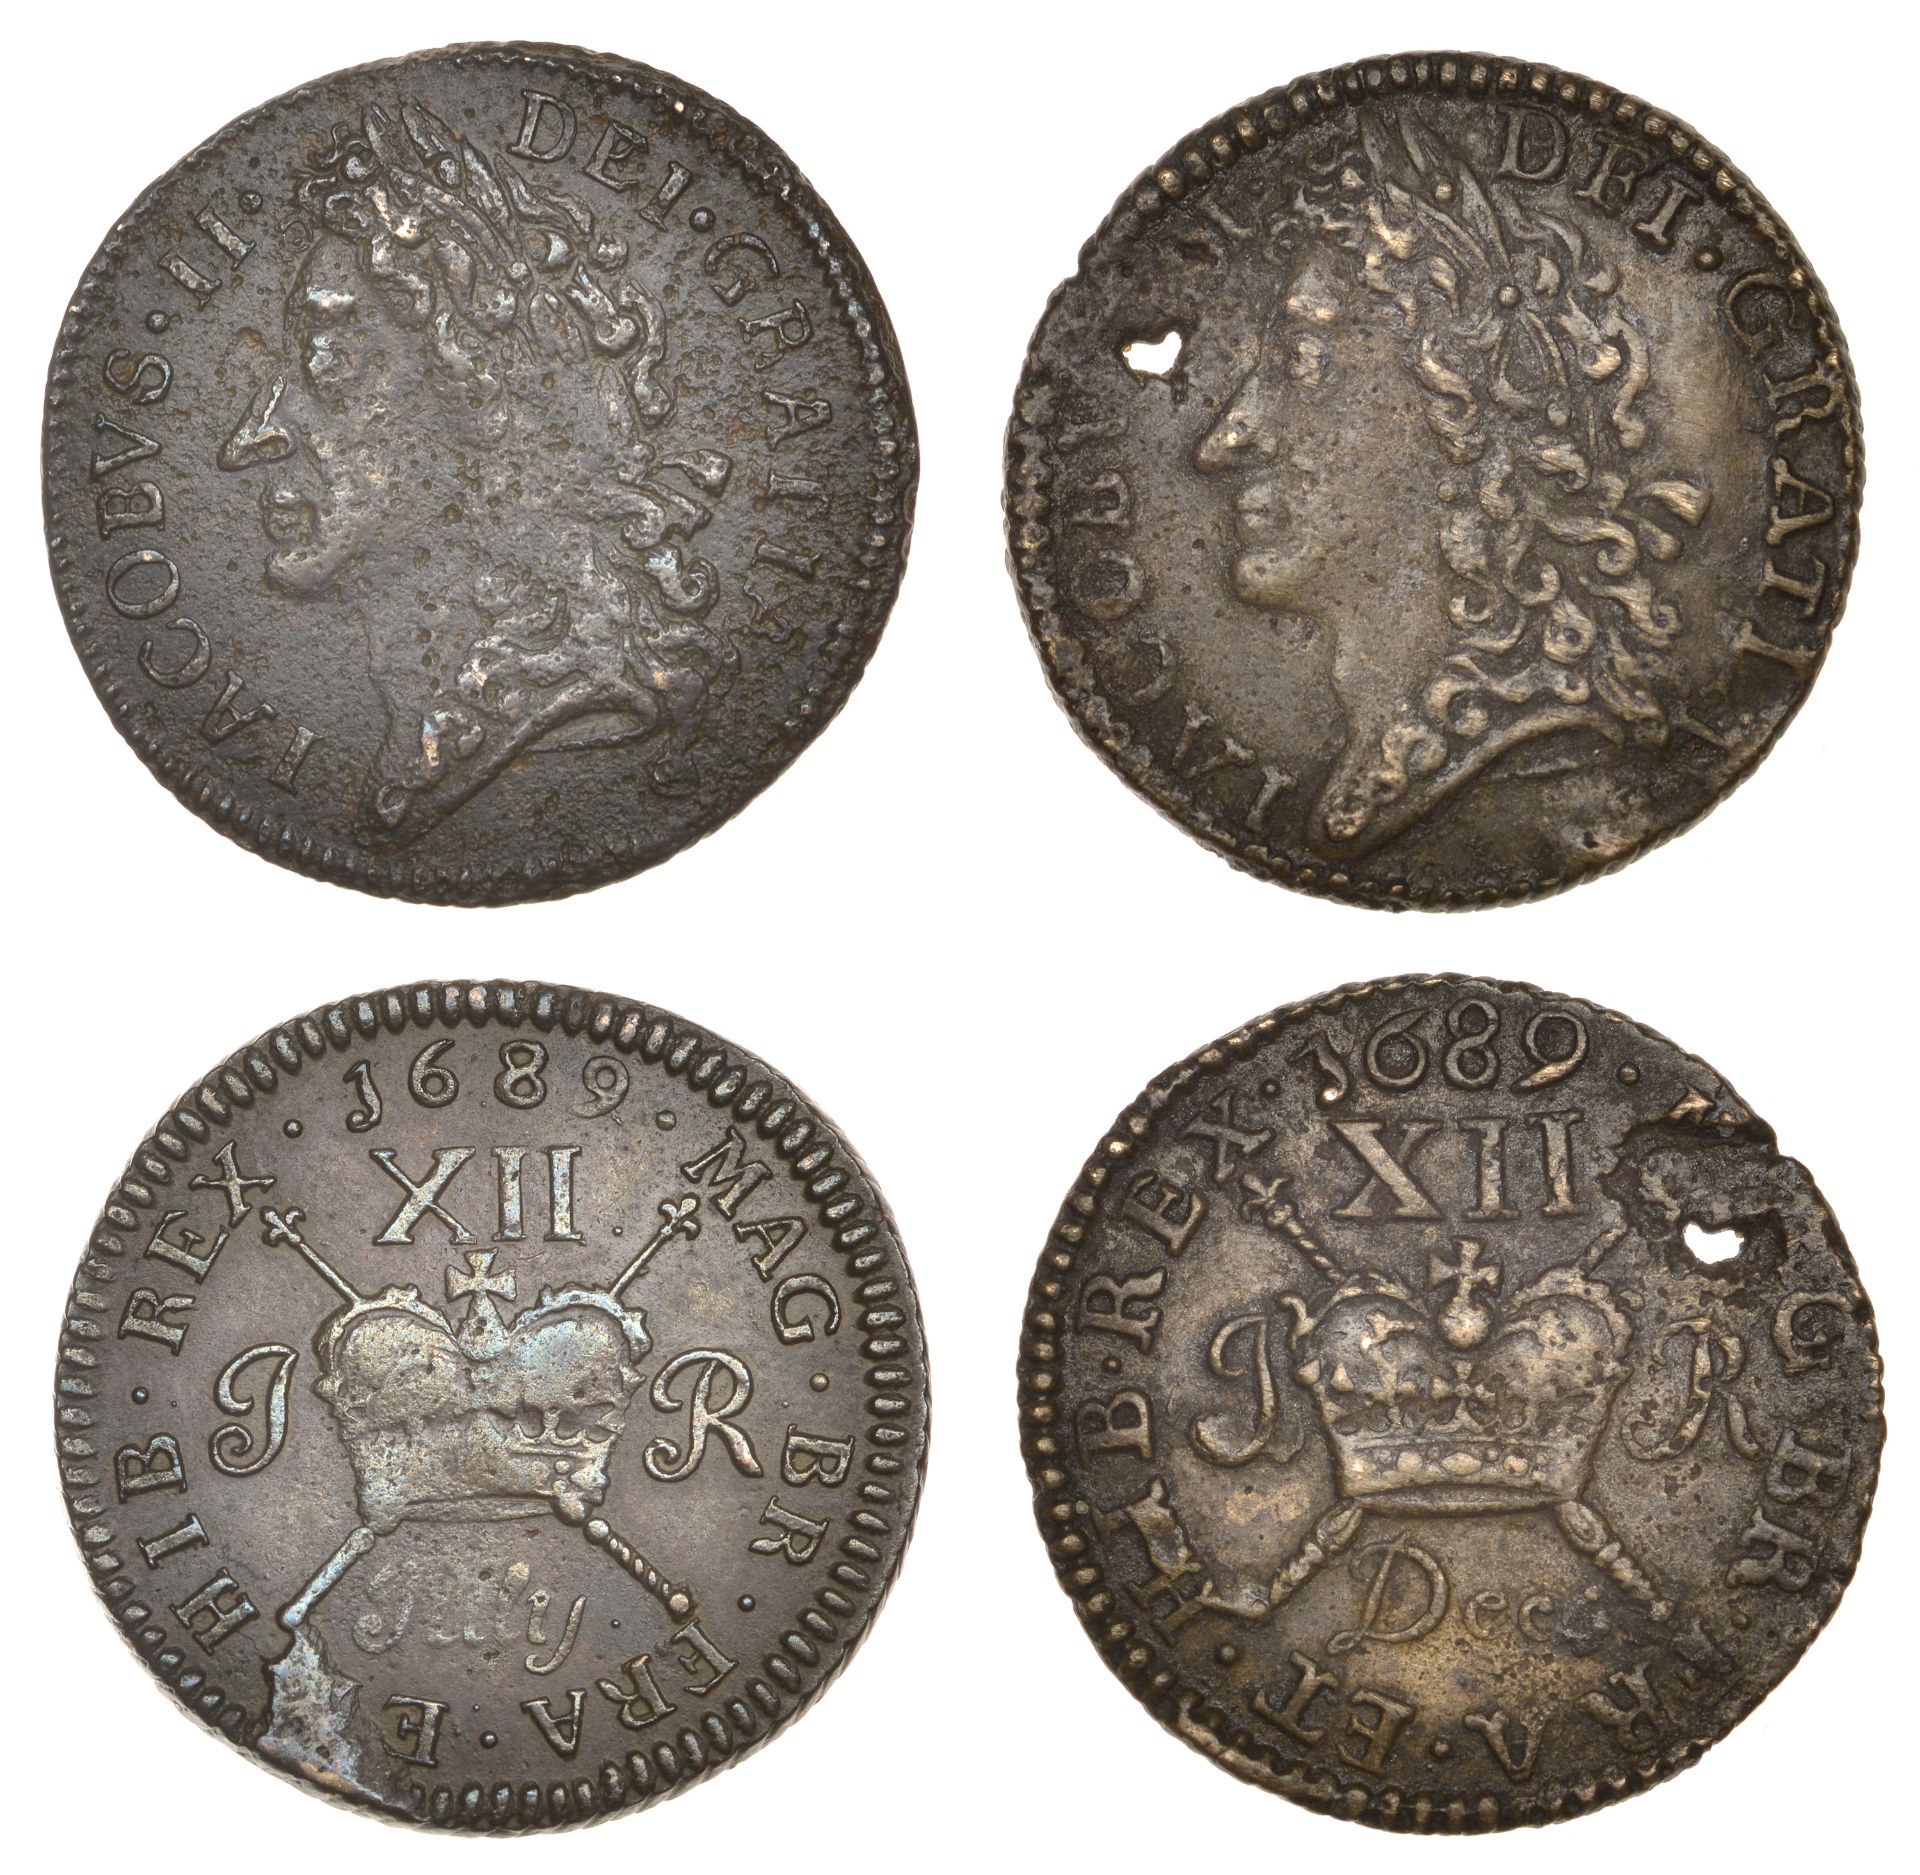 Irish Coins from Various Properties